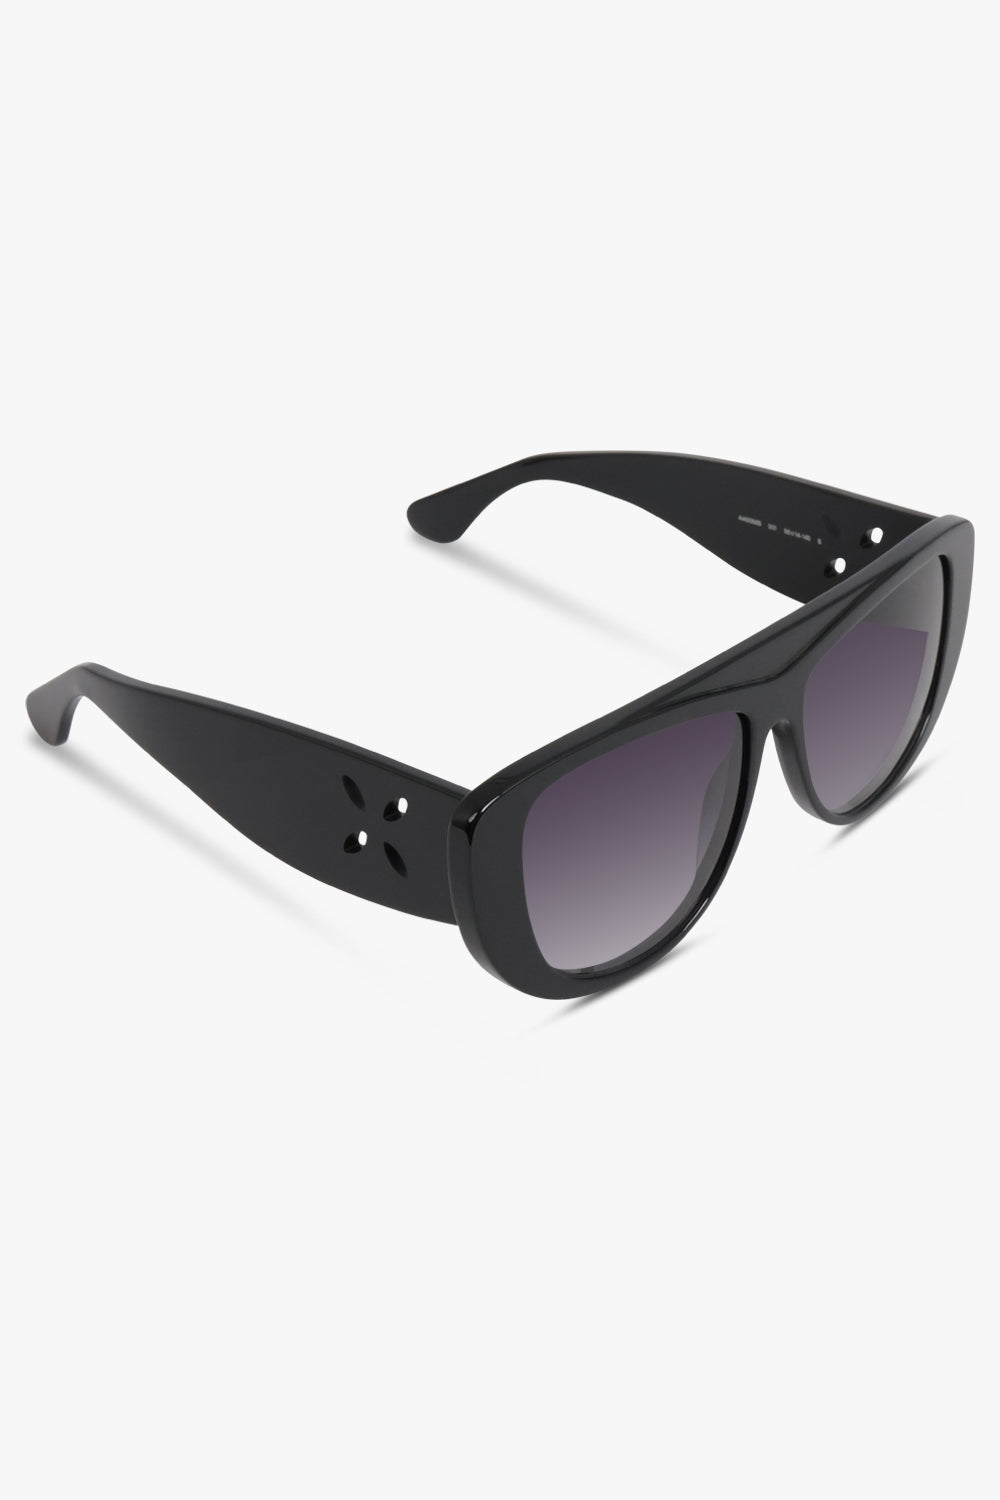 ALAIA ACCESSORIES BLACK / BLACK / ONE SIZE AA0056S Mask Sunglasses | Black